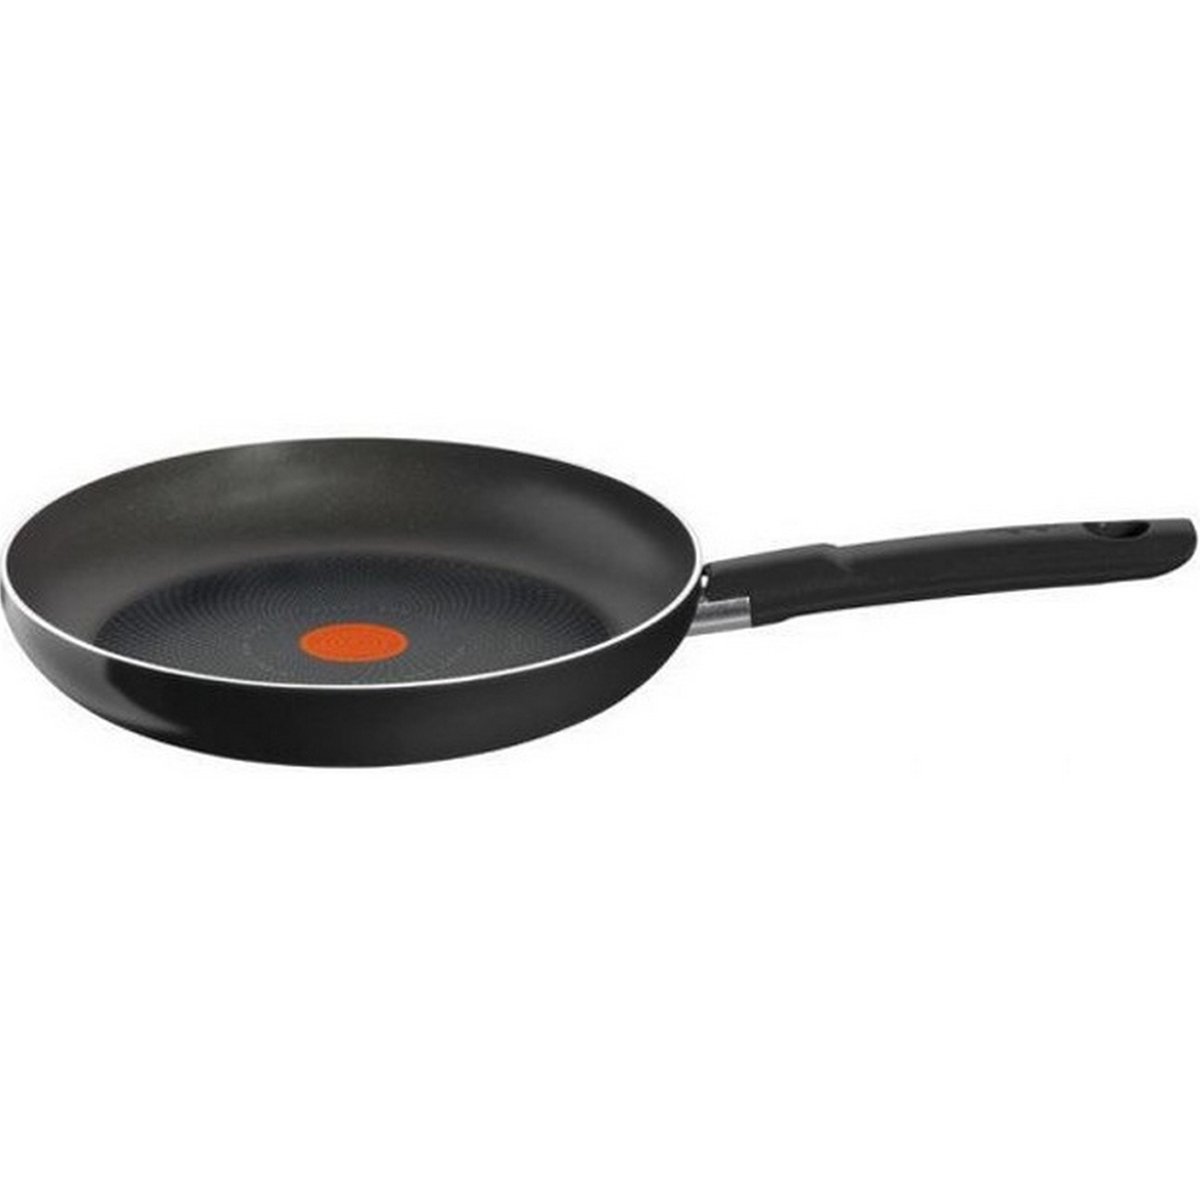 Tefal Non-Stick Fry Pan with Spatula, 26 cm, B6160562